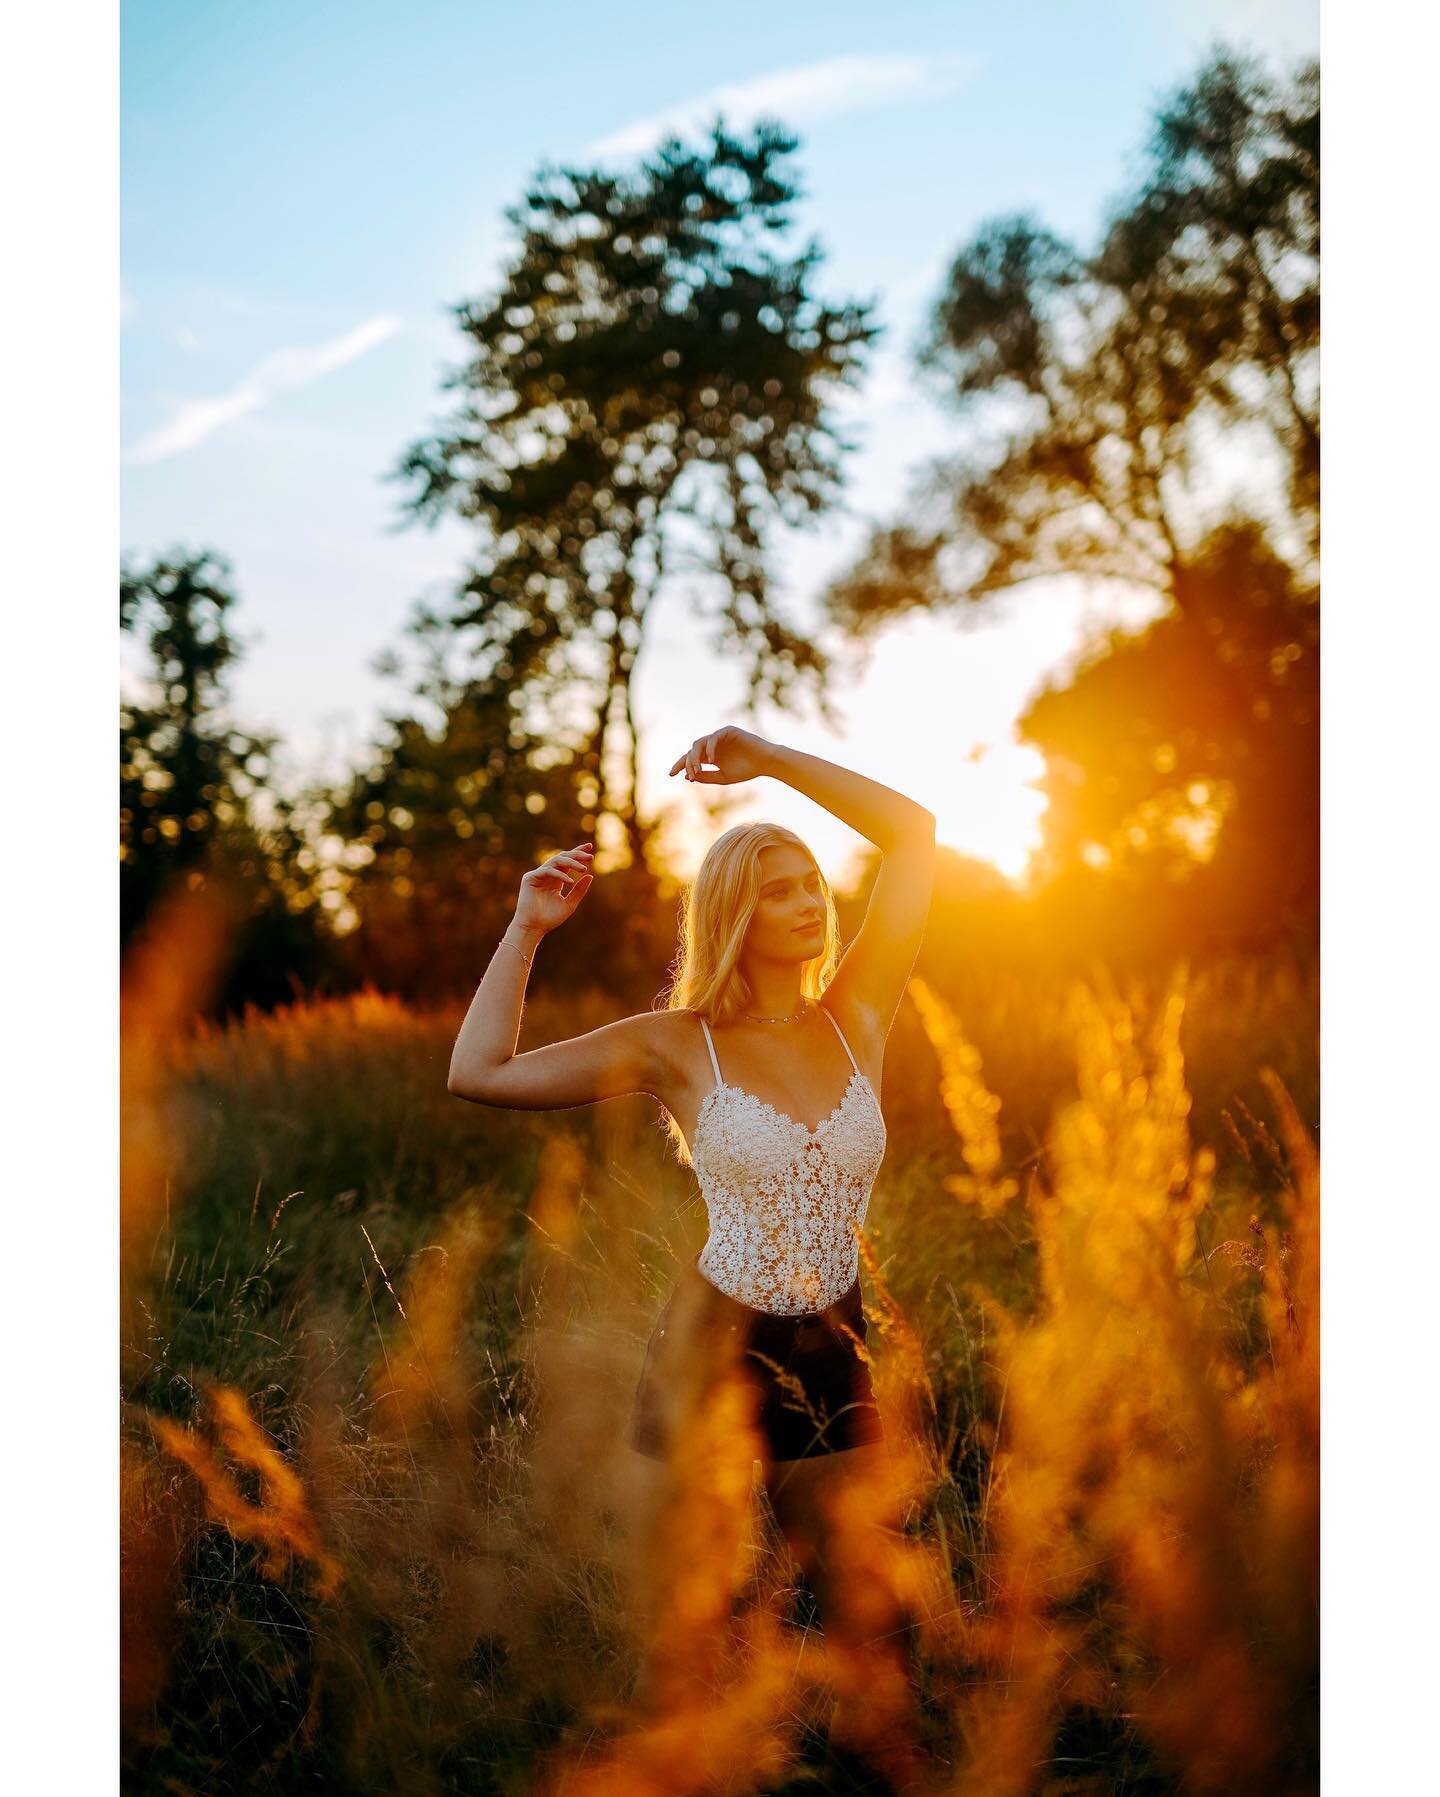 | vivien 
.
.
.
#photoshoot #photography #photographer #fotoshooting #portrait #portraitphotography #model #beauty  #portraitsmadeingermany #outdoorphotography #girl #lingerie #sunset #sunsetlover #availablelight #availablelightphotography #sunsetpho